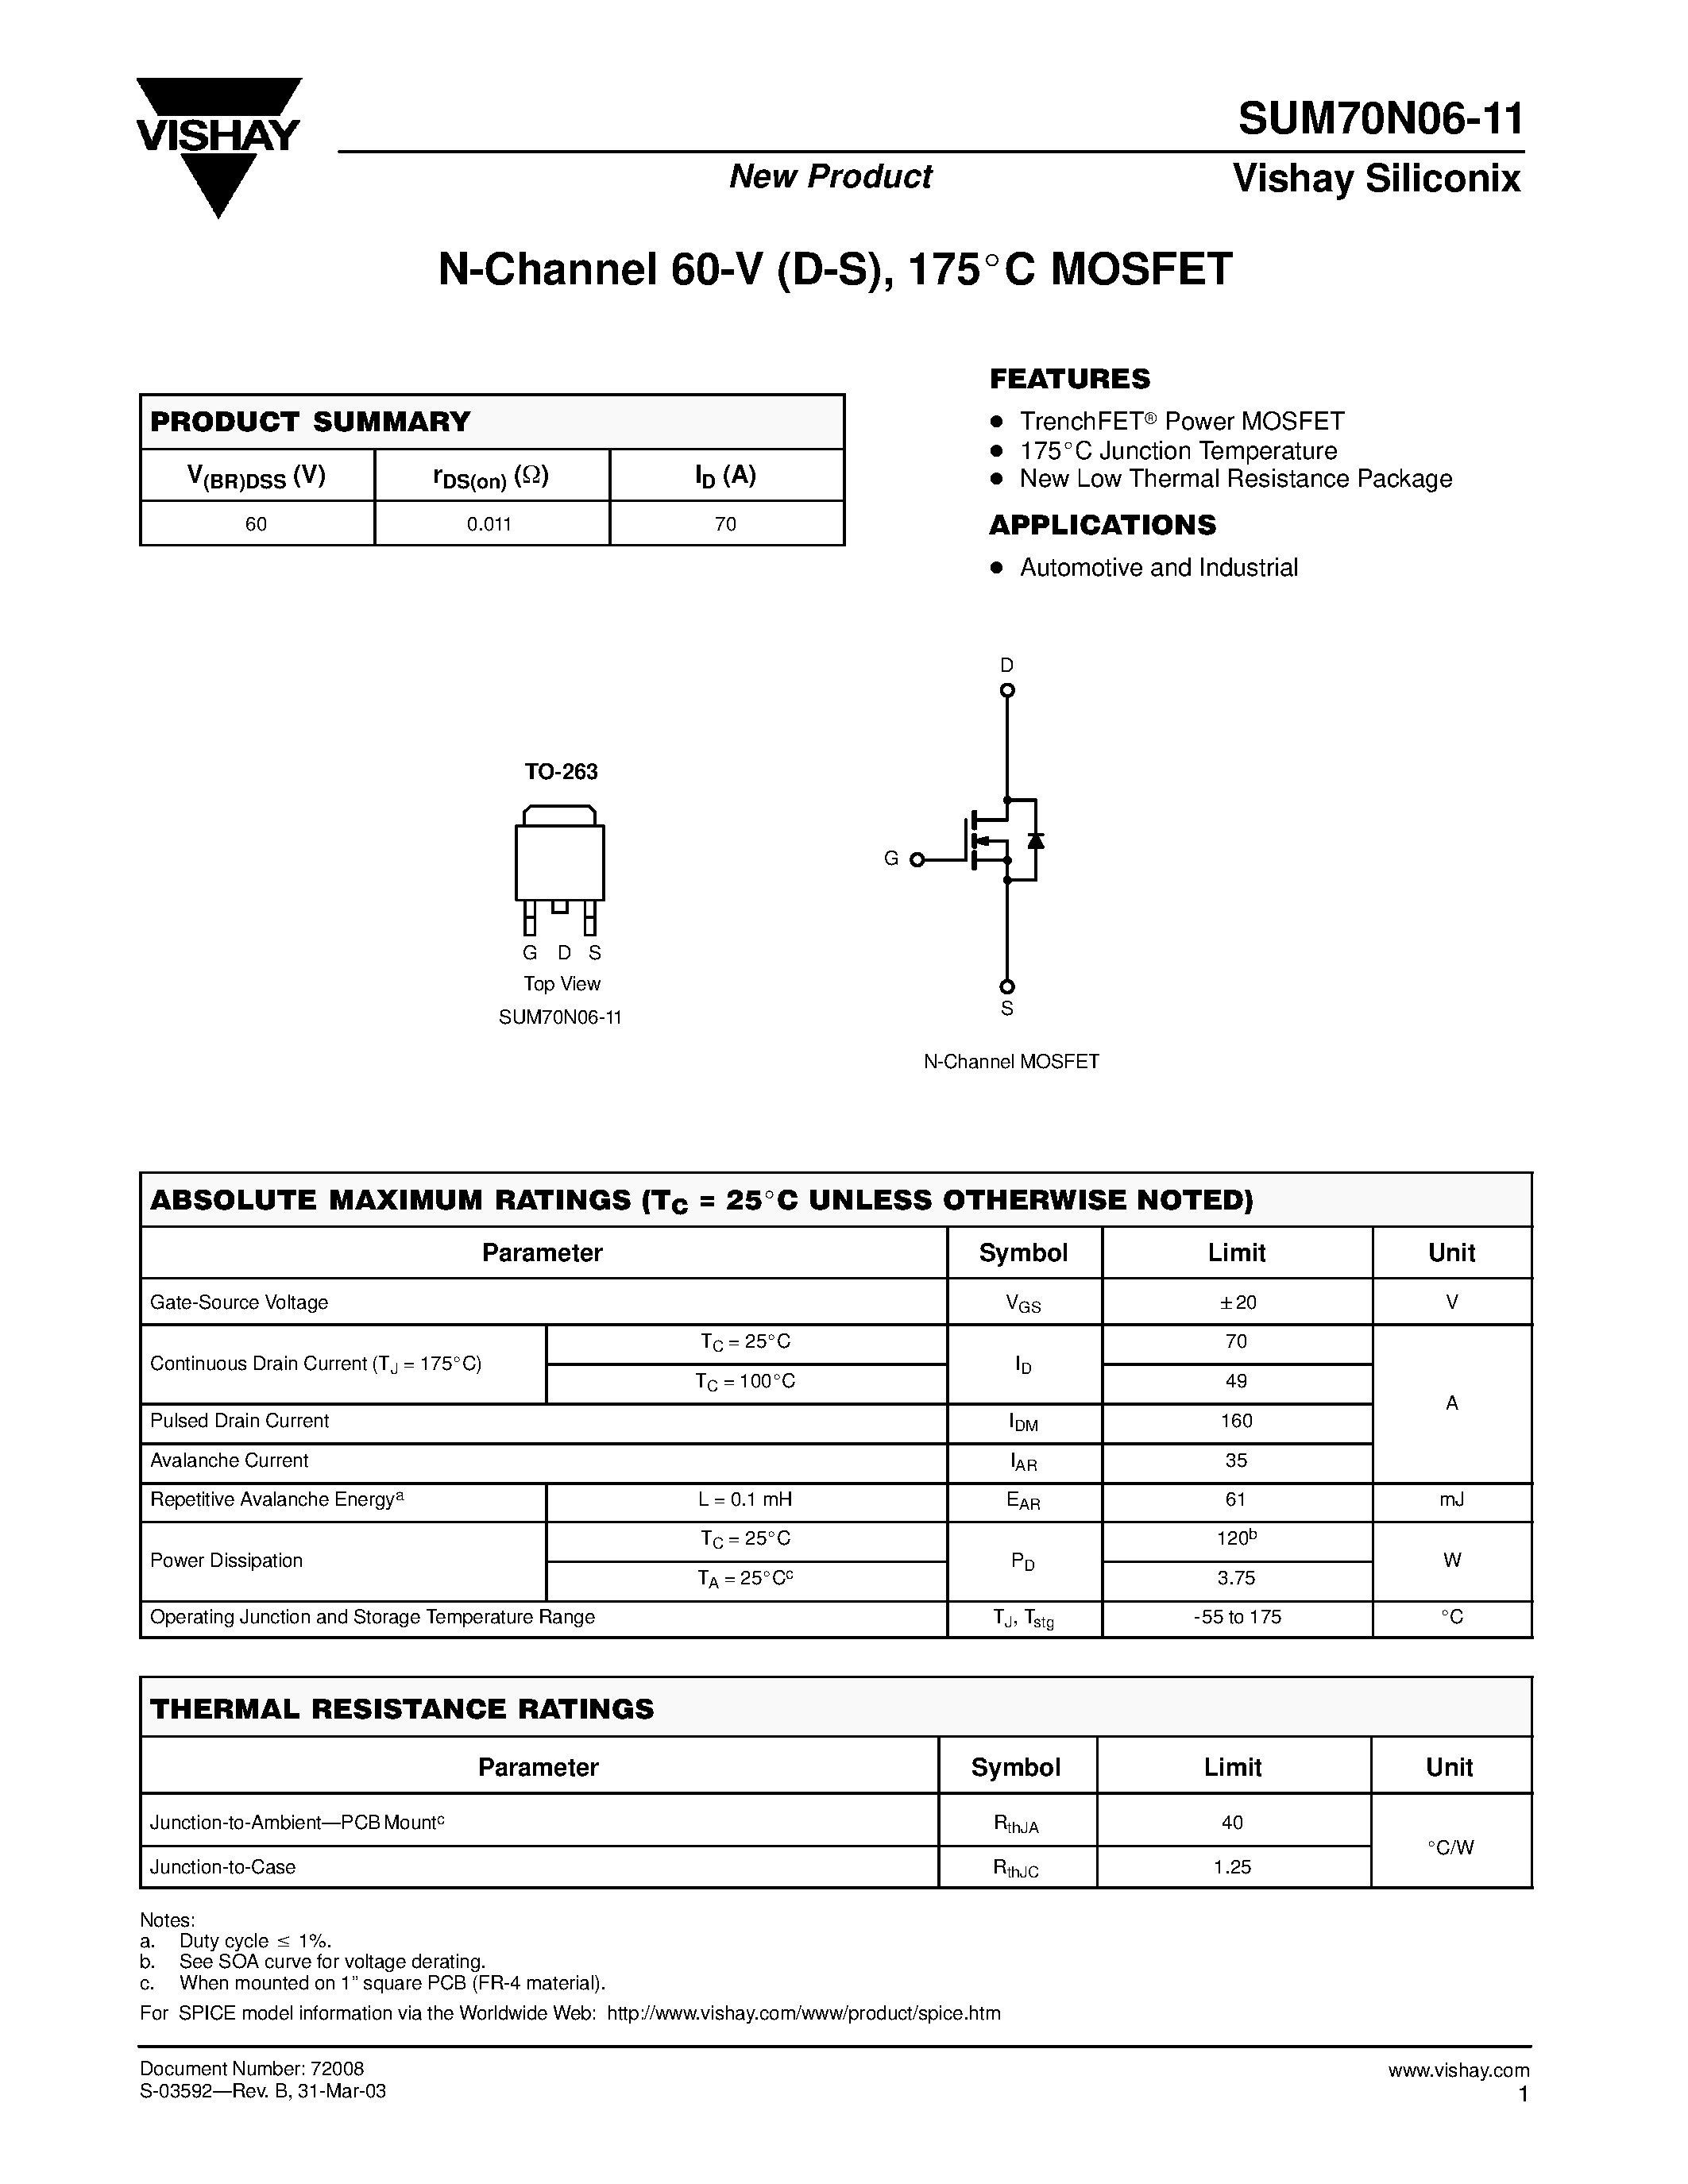 Даташит SUM70N06-11 - N-Channel 60-V (D-S) 175 C MOSFET страница 1